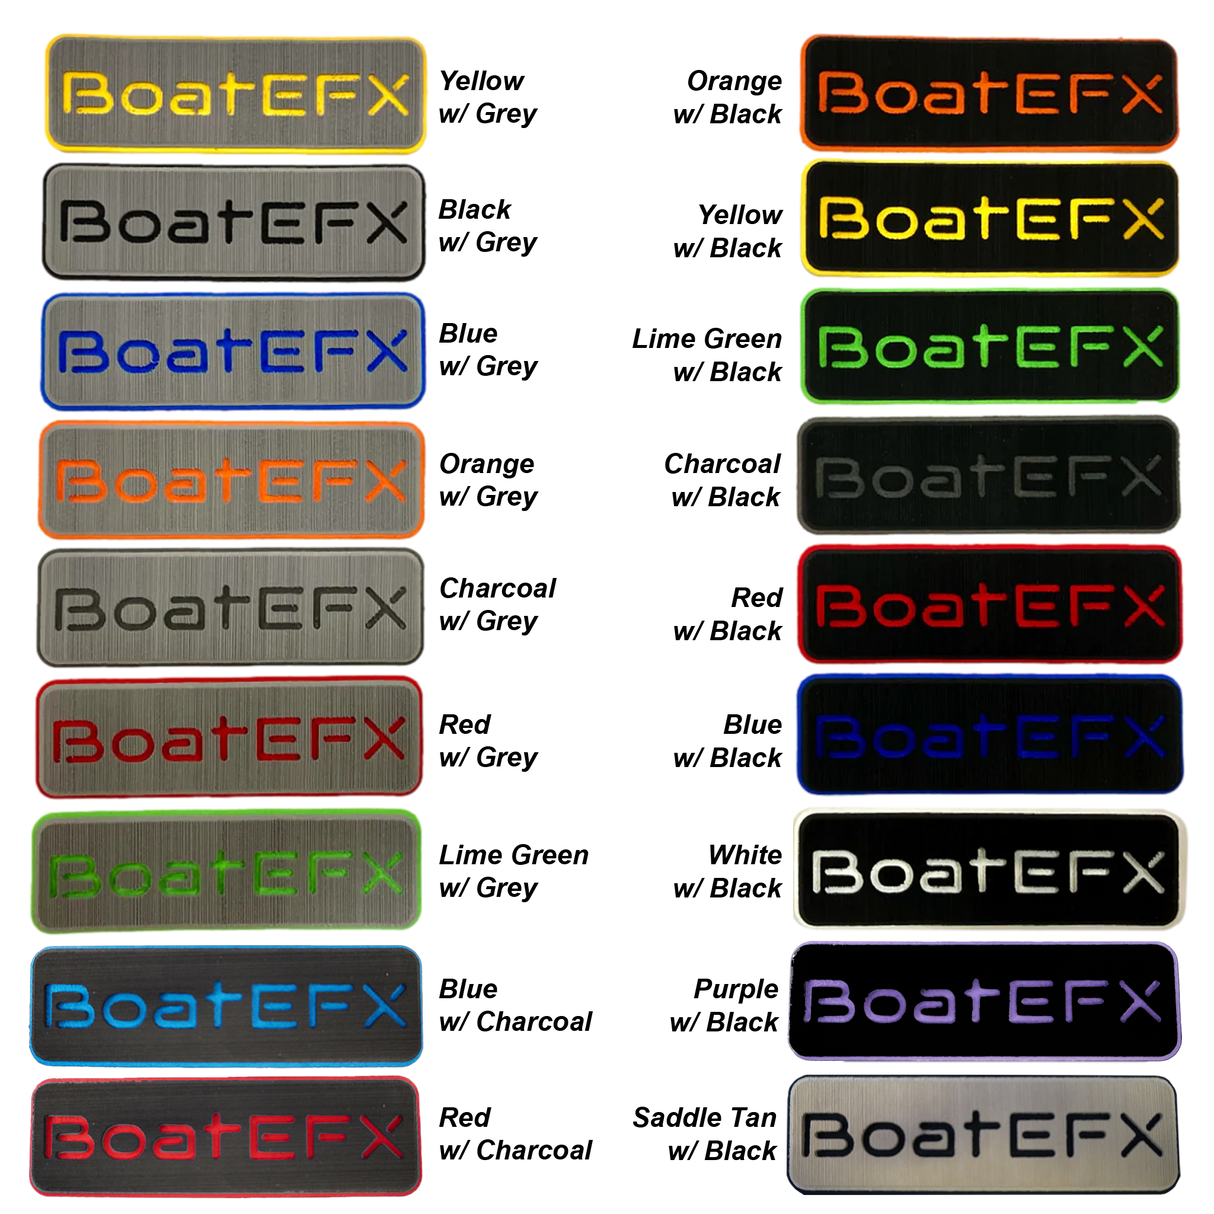 Custom Boat Trailer Steps by BoatEFX